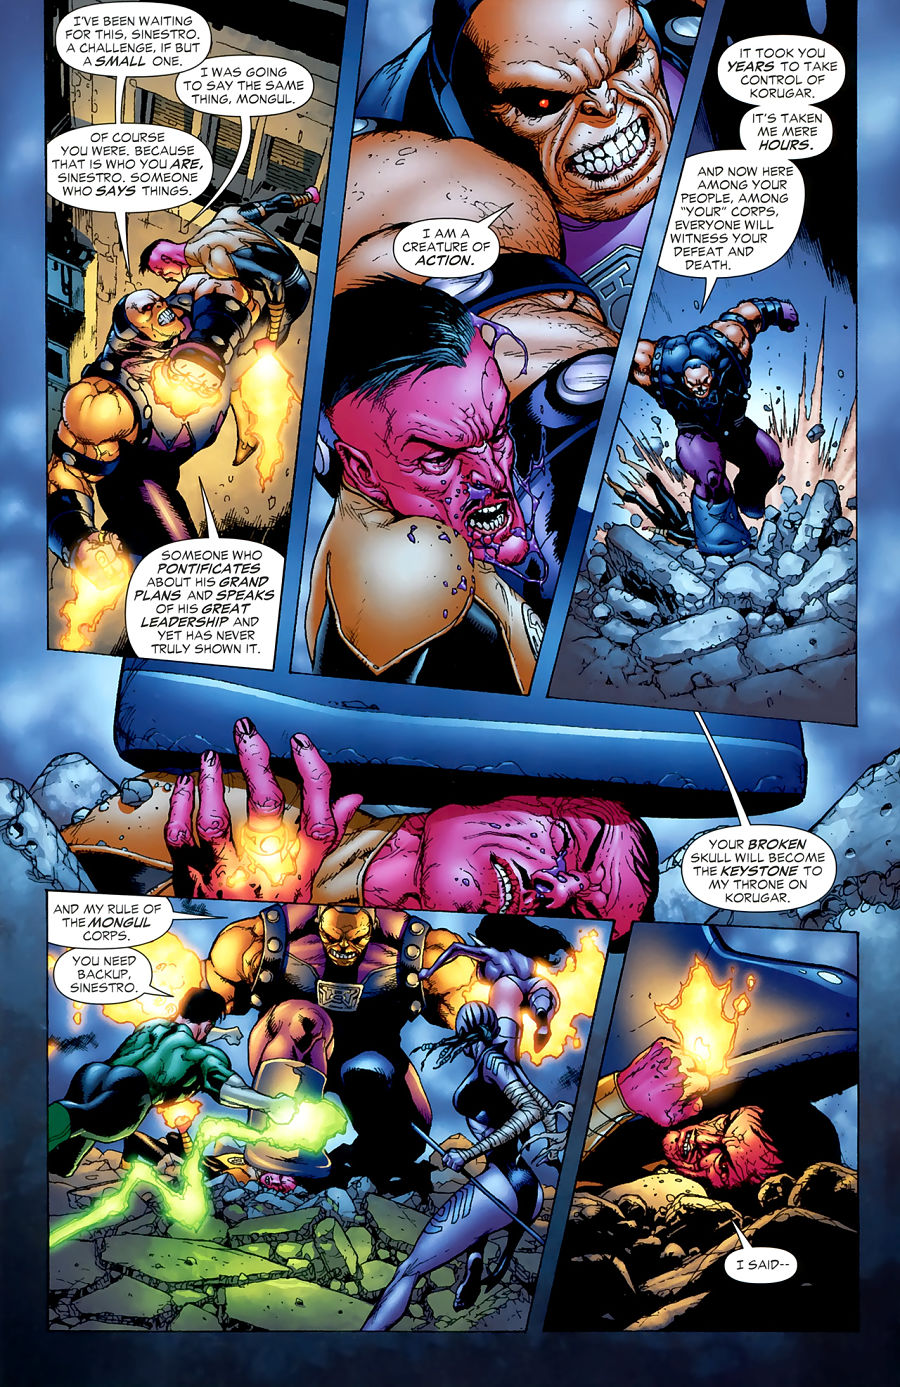 Sinestro vs. Mongul (Green Lantern #46)